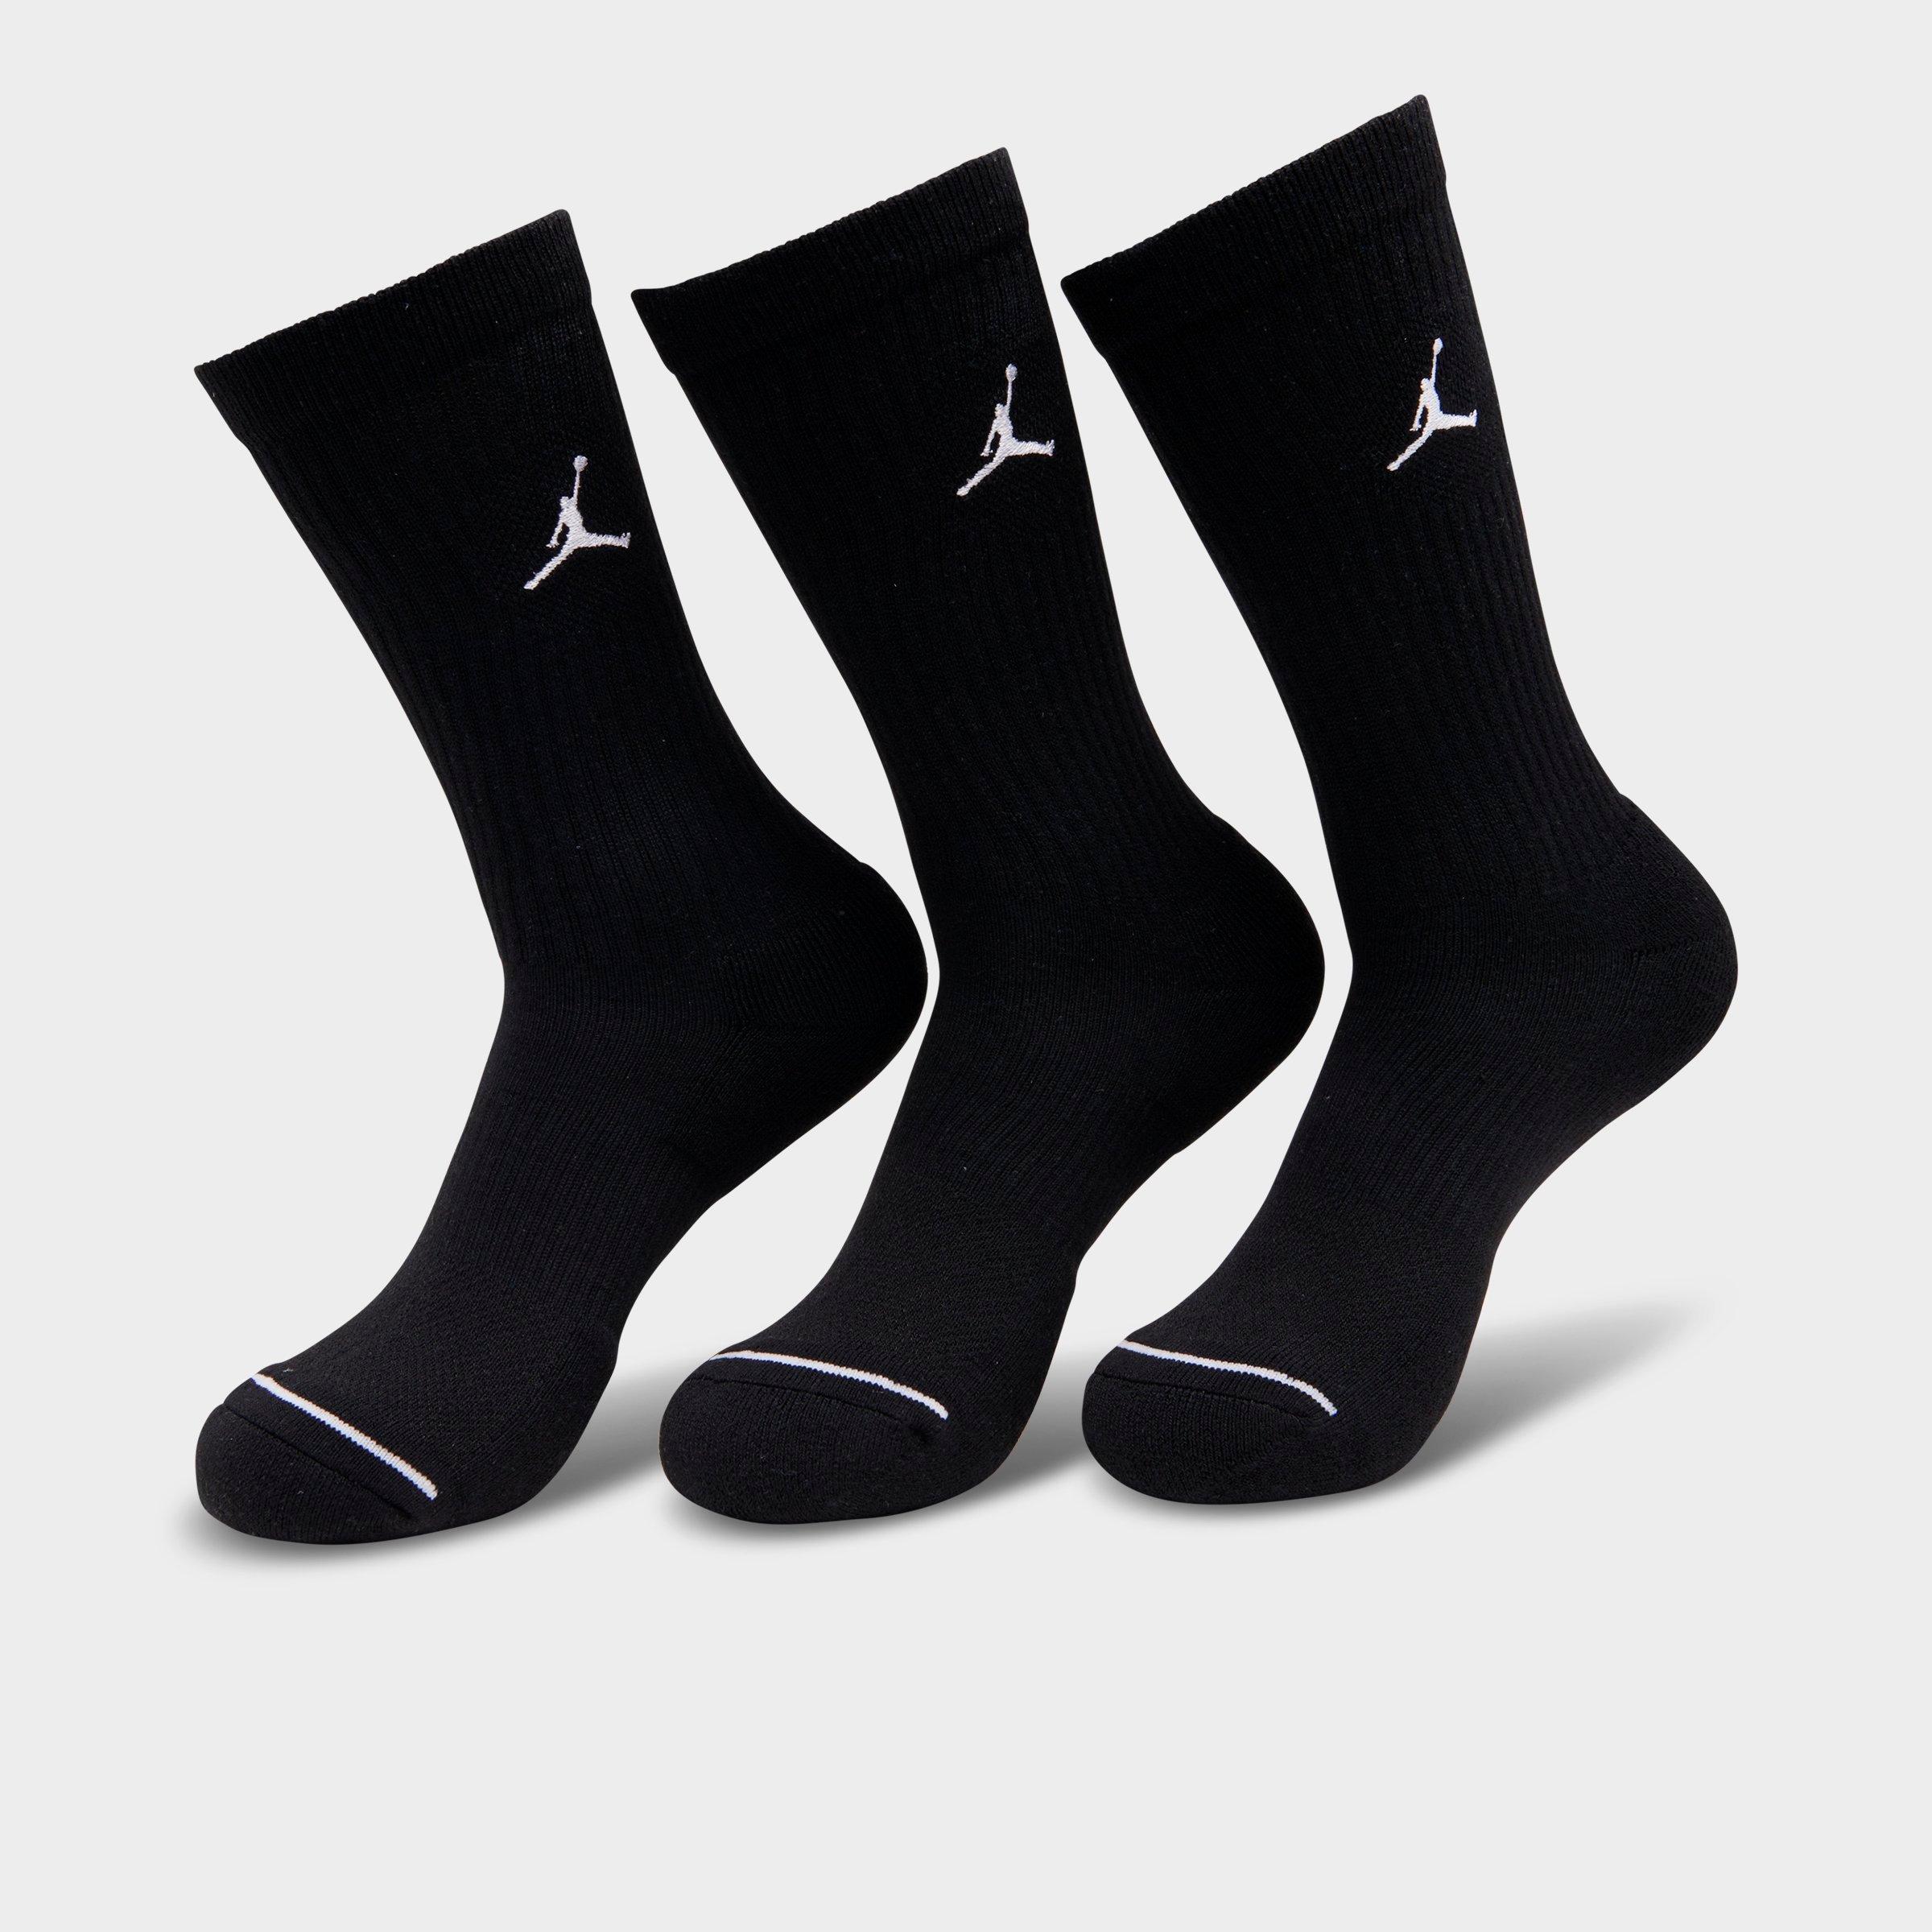 finish line jordan socks